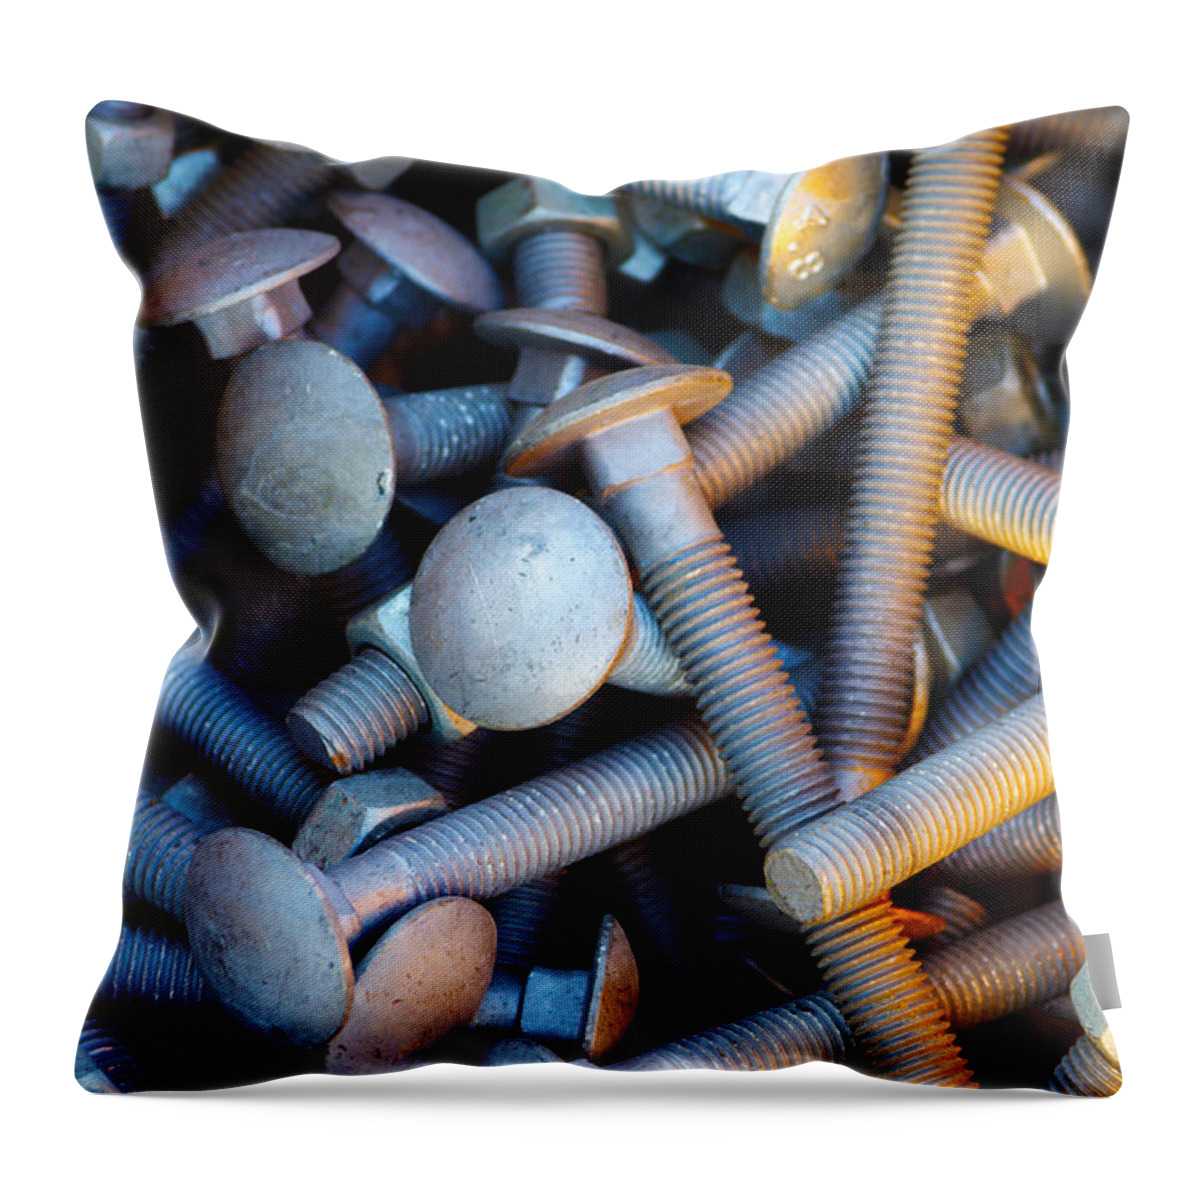 Aluminium Throw Pillow featuring the photograph Bunch of Screws by Carlos Caetano